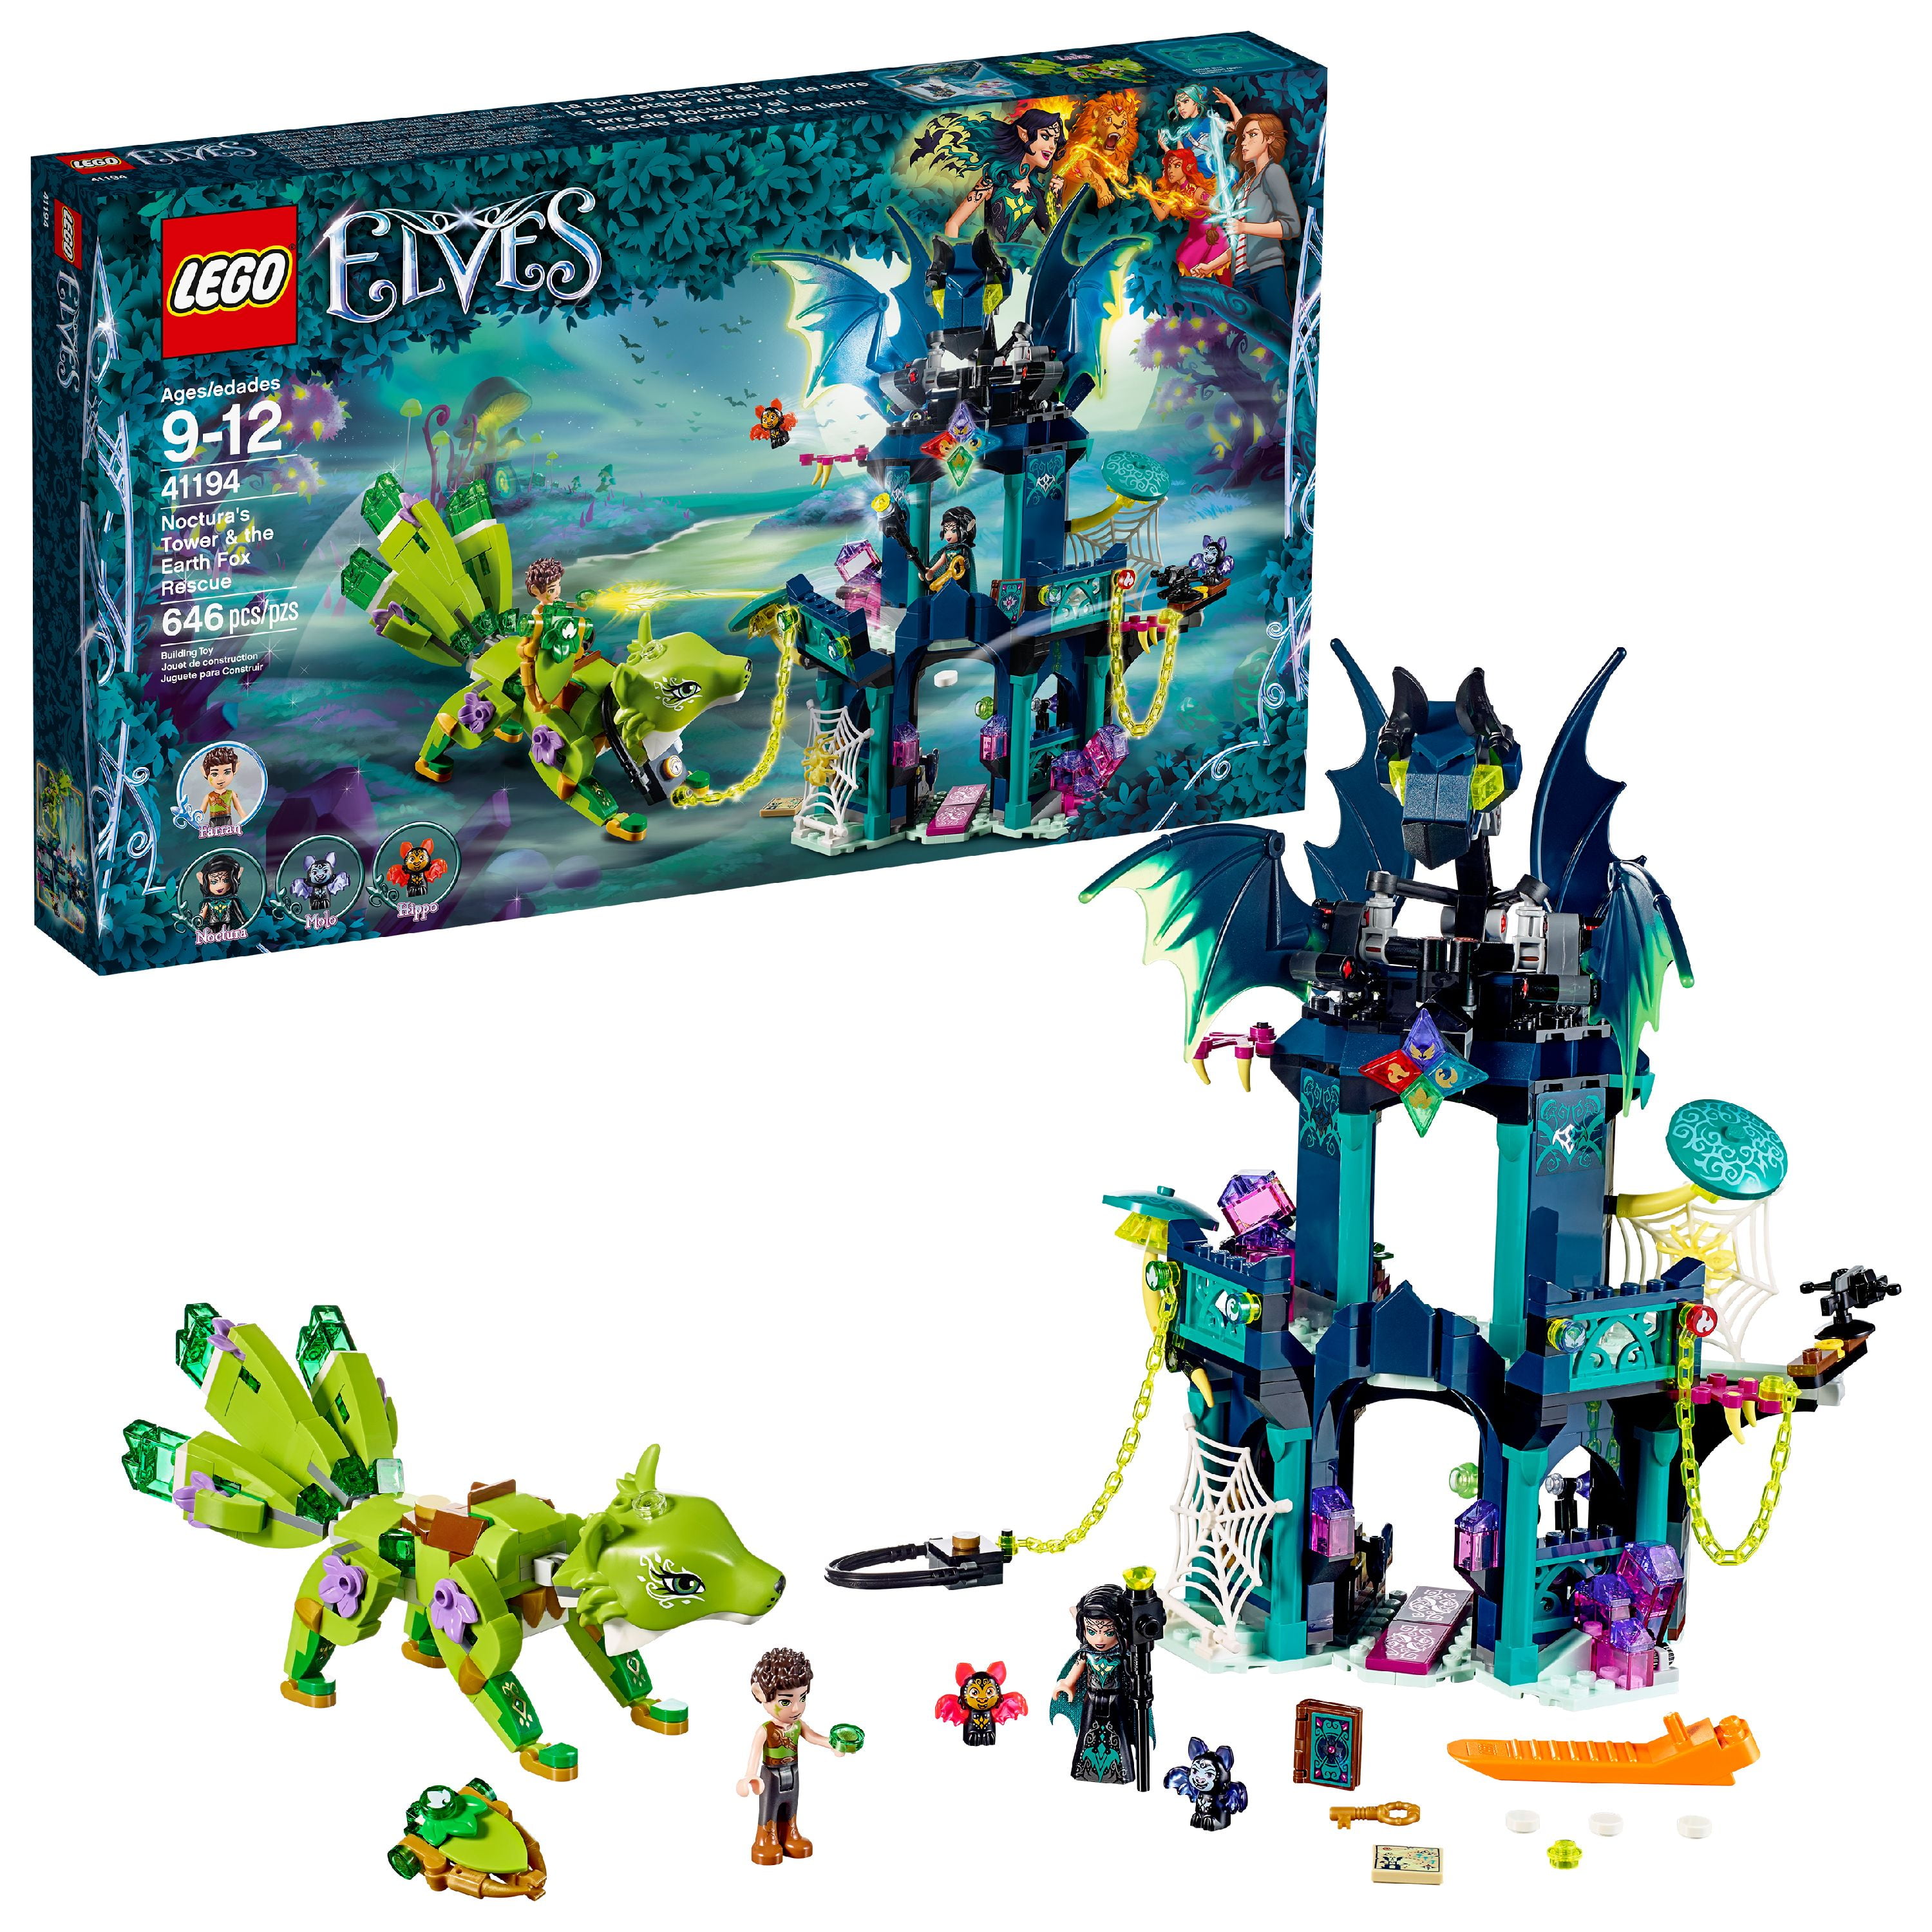 41195 Noctura LEGO Elves - Figur Minifig Elfe Lumia Schattenstab Hexe 41195 